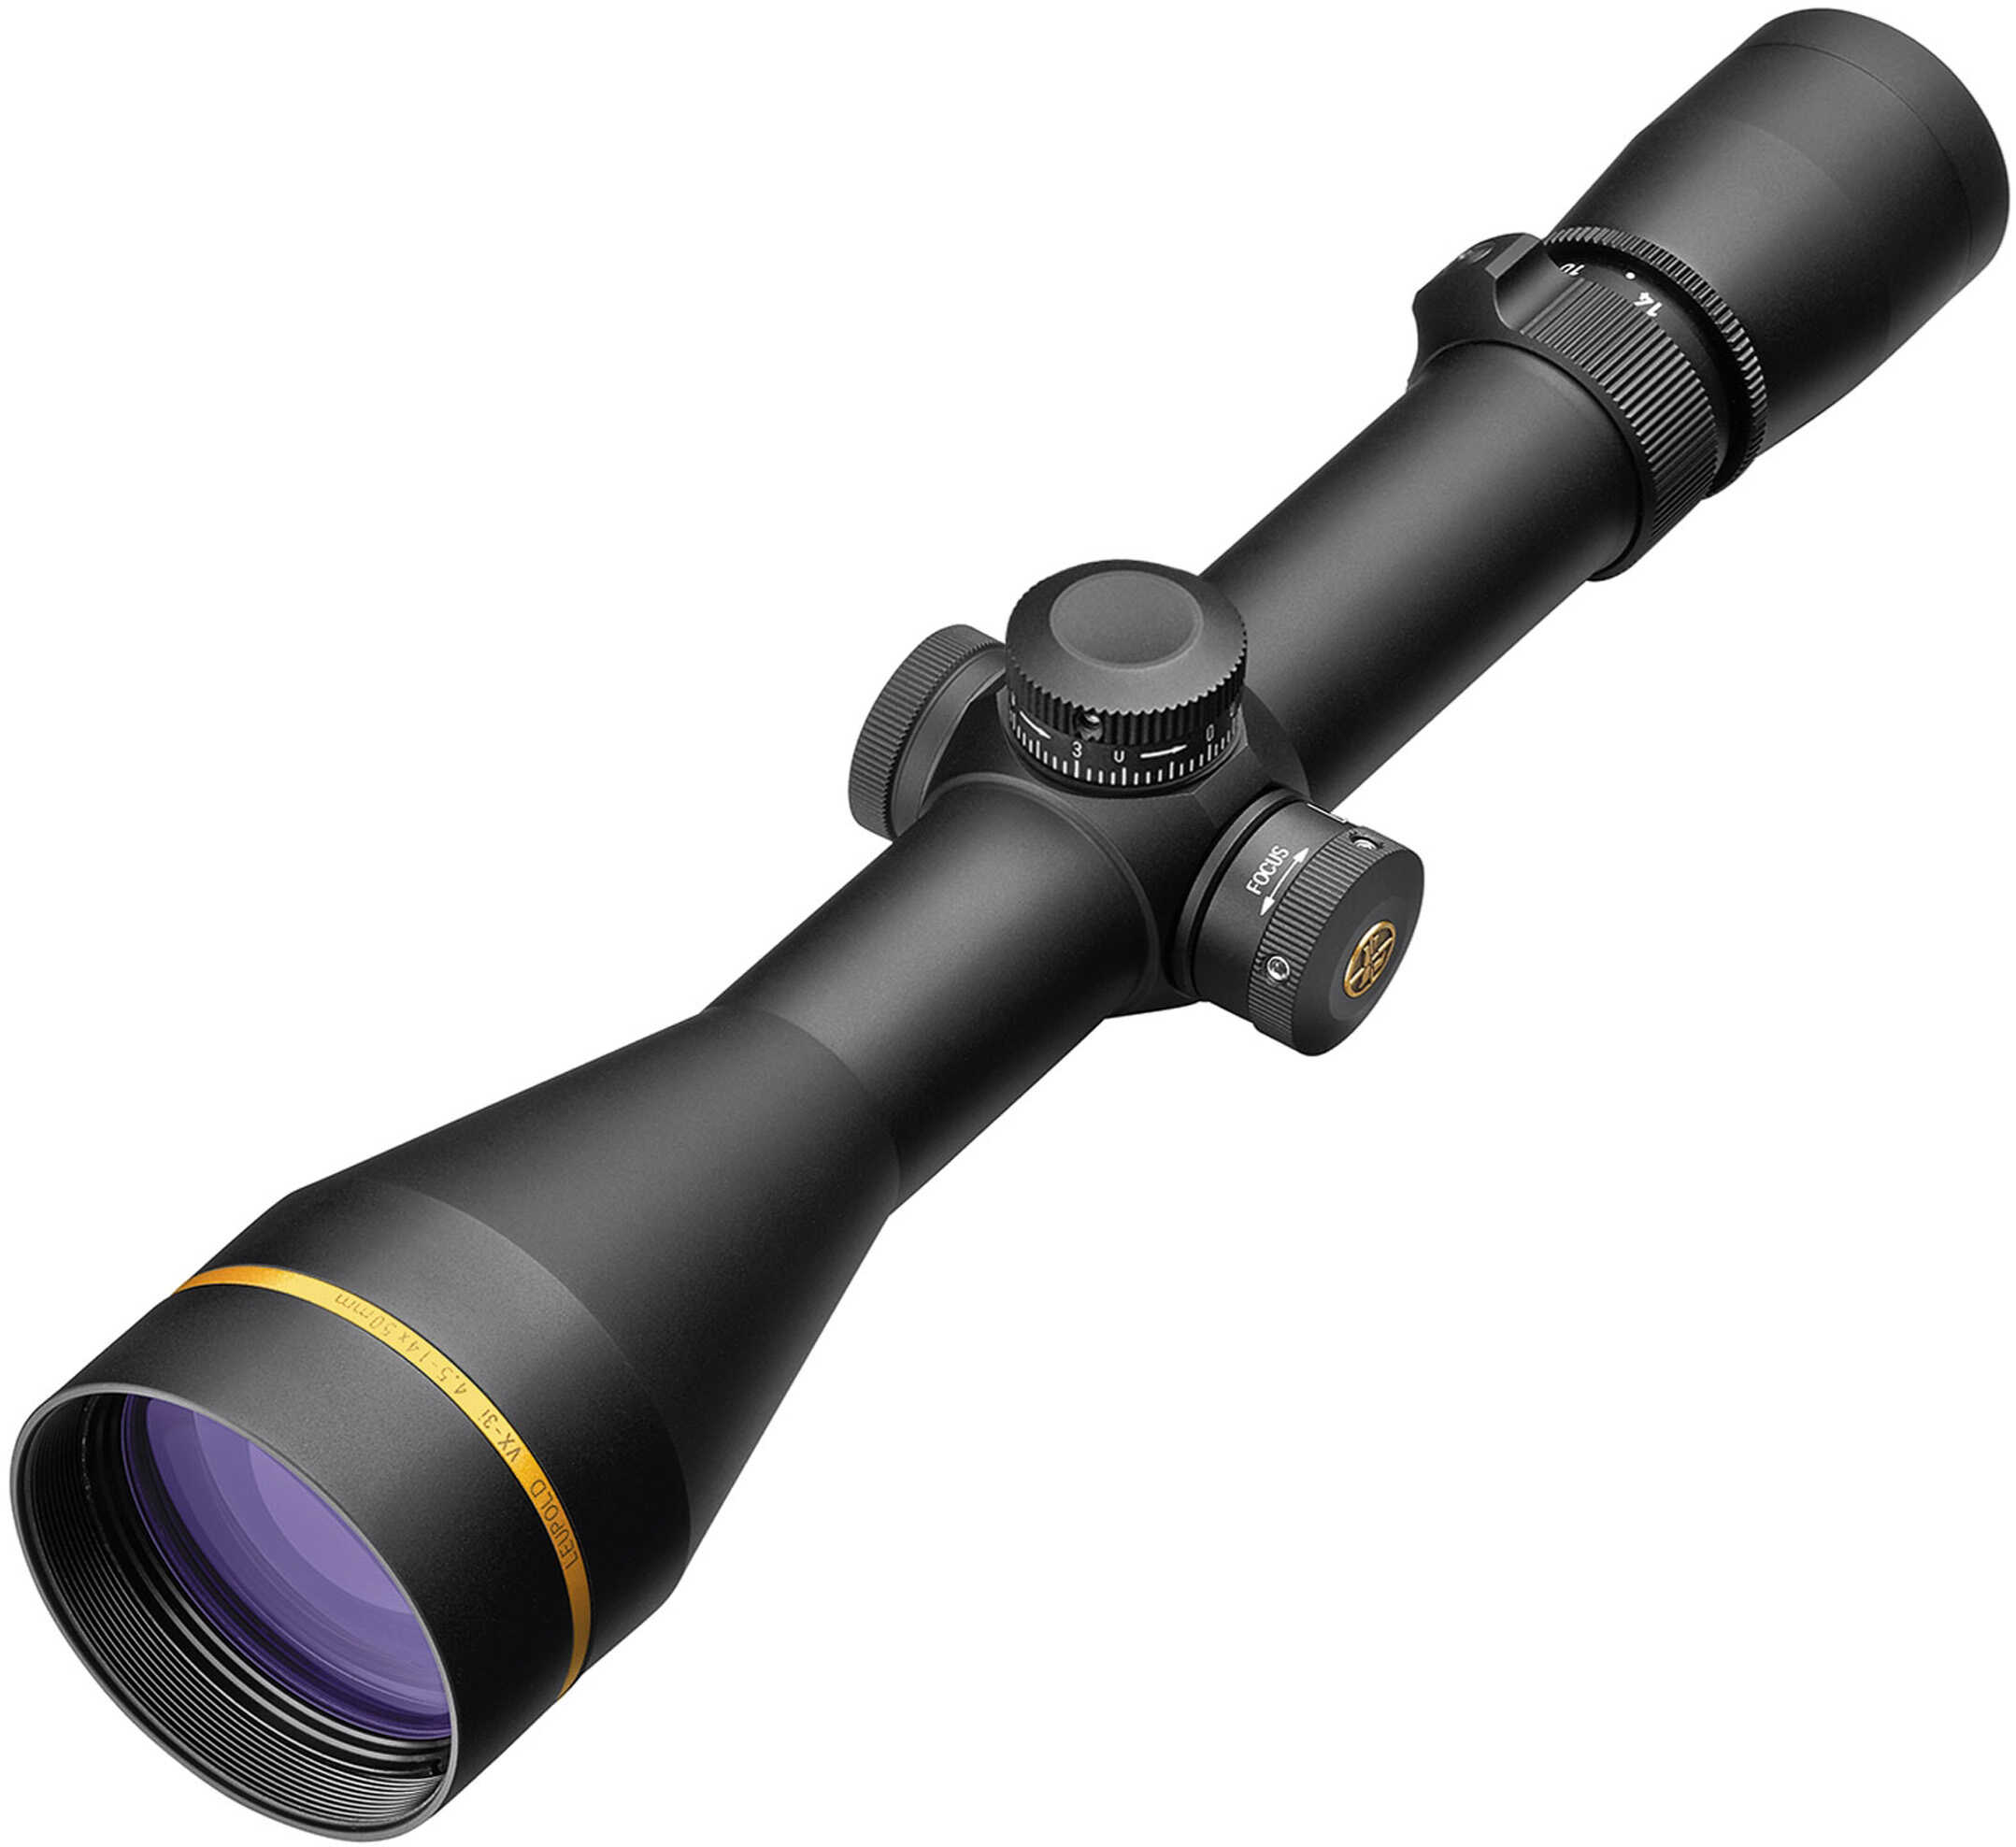 Leupold VX-3i Riflescope 4.5-14x50mm 30mm Tube CDS Side Focus Wind-Plex Reticle Matte Black Md: 170712